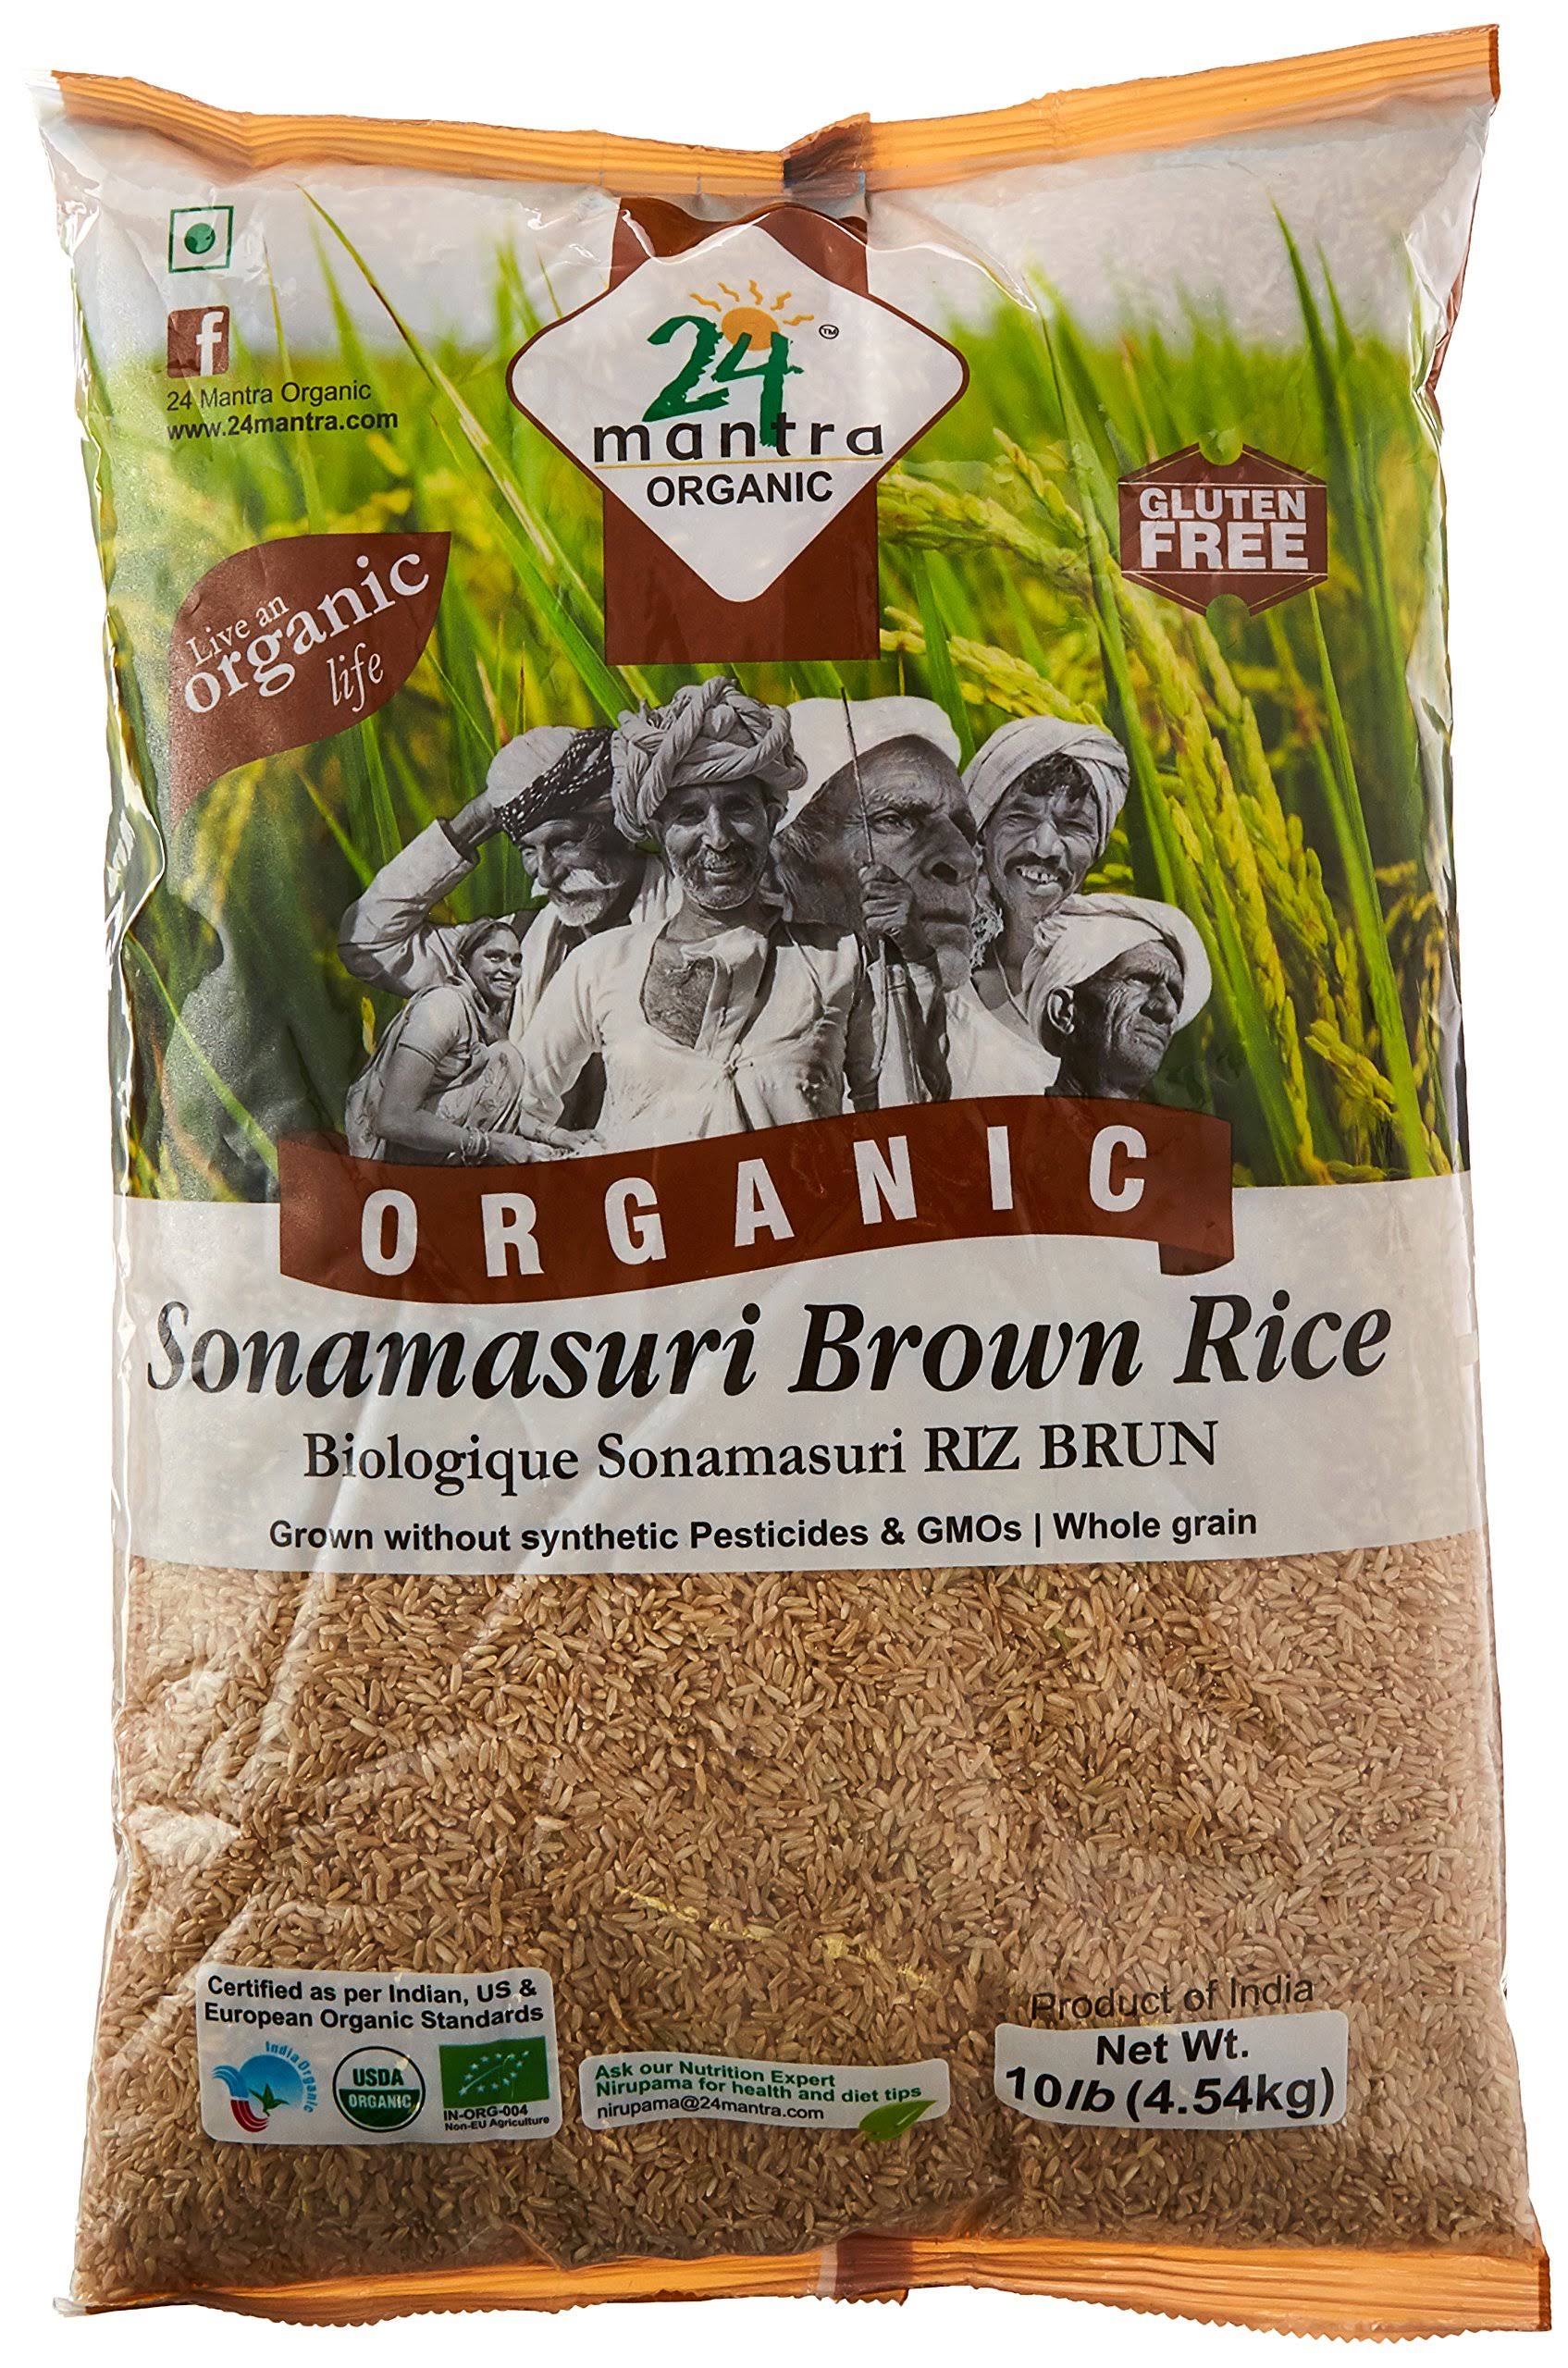 24 Mantra Organic Raw Brown Sona Masoori Rice 10 lb